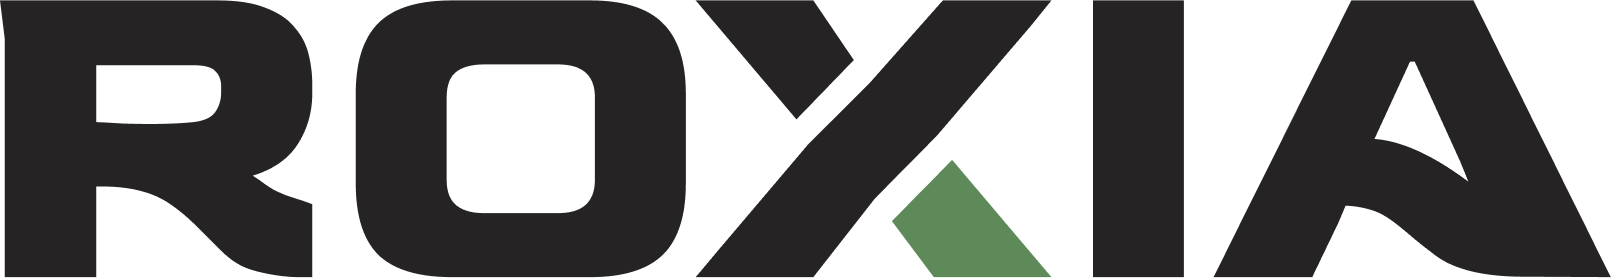 Roxia Logo